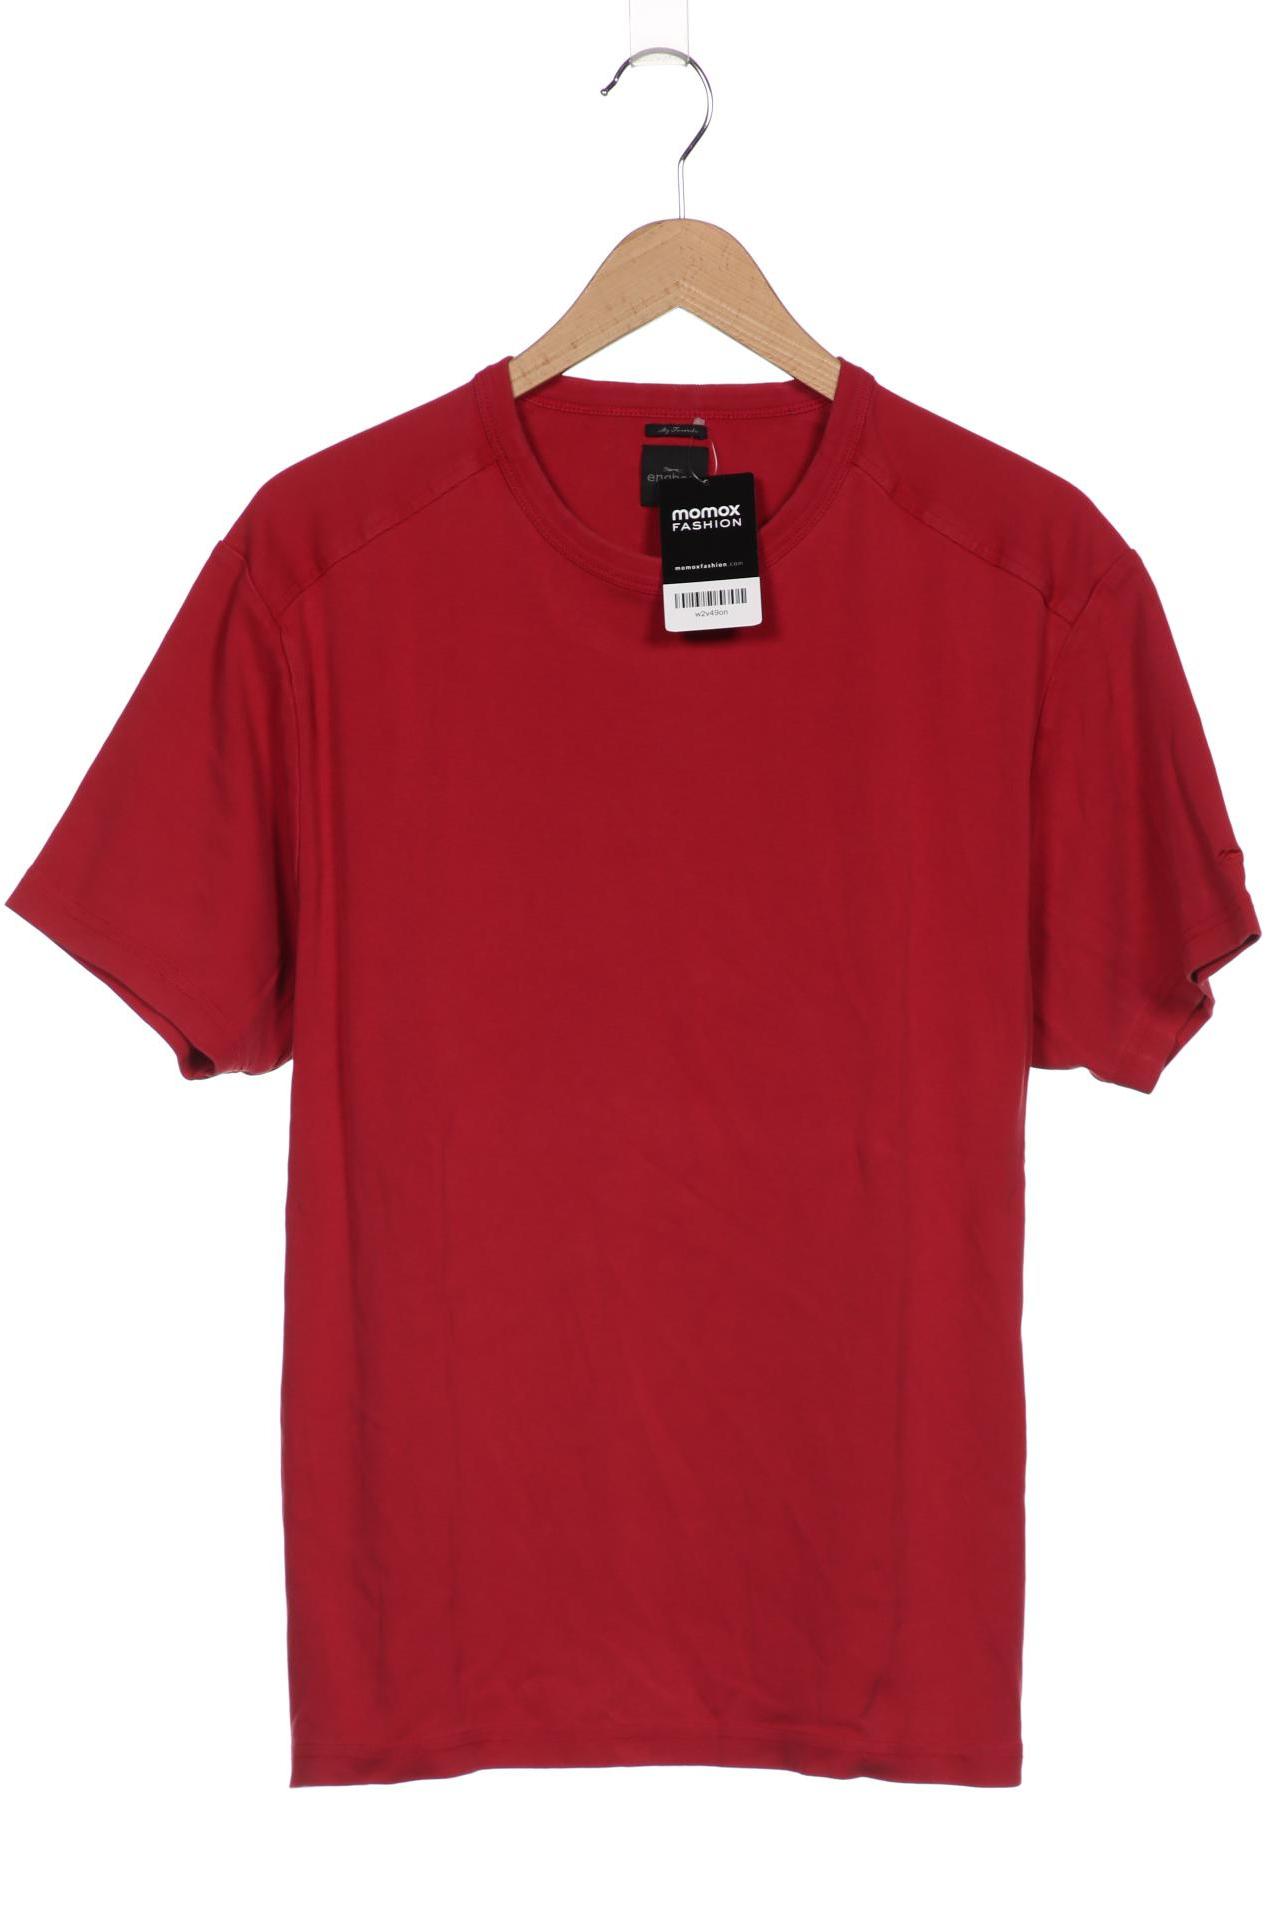 engbers Herren T-Shirt, rot von engbers